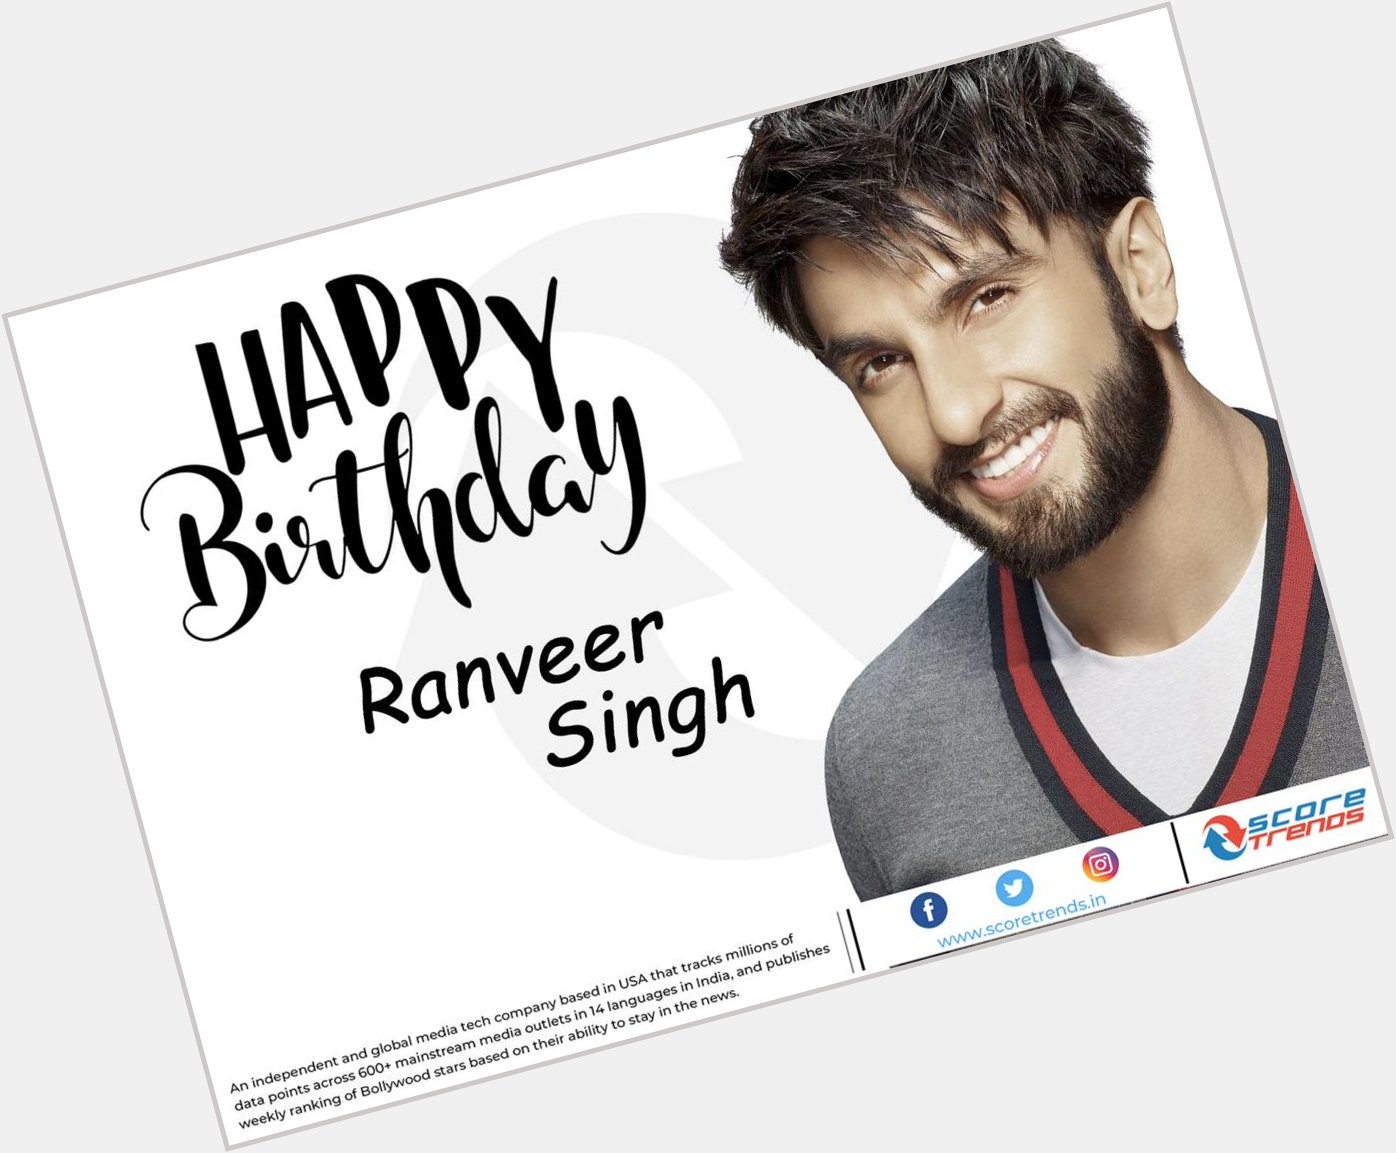 Score Trends wishes Ranveer Singh a Happy Birthday!! 